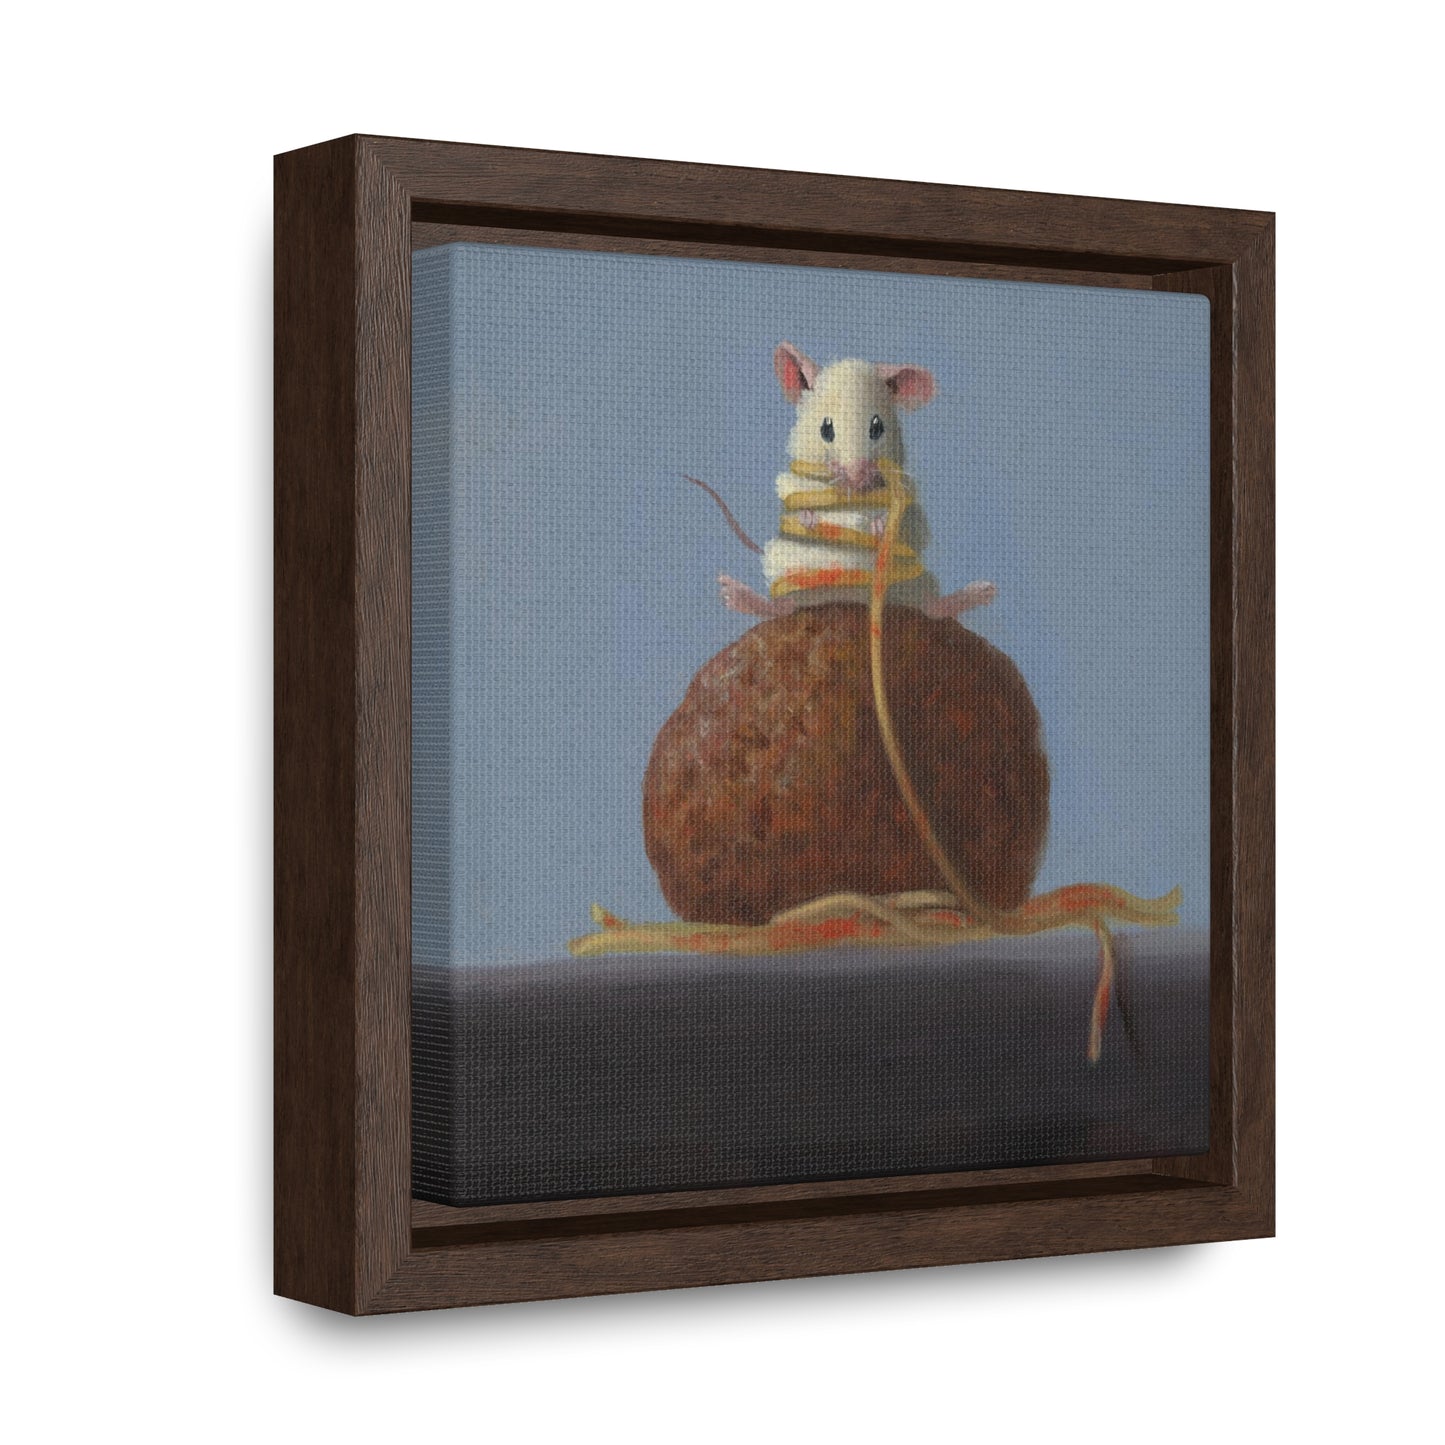 Stuart Dunkel: "Tied Up" - Framed Canvas Reproduction